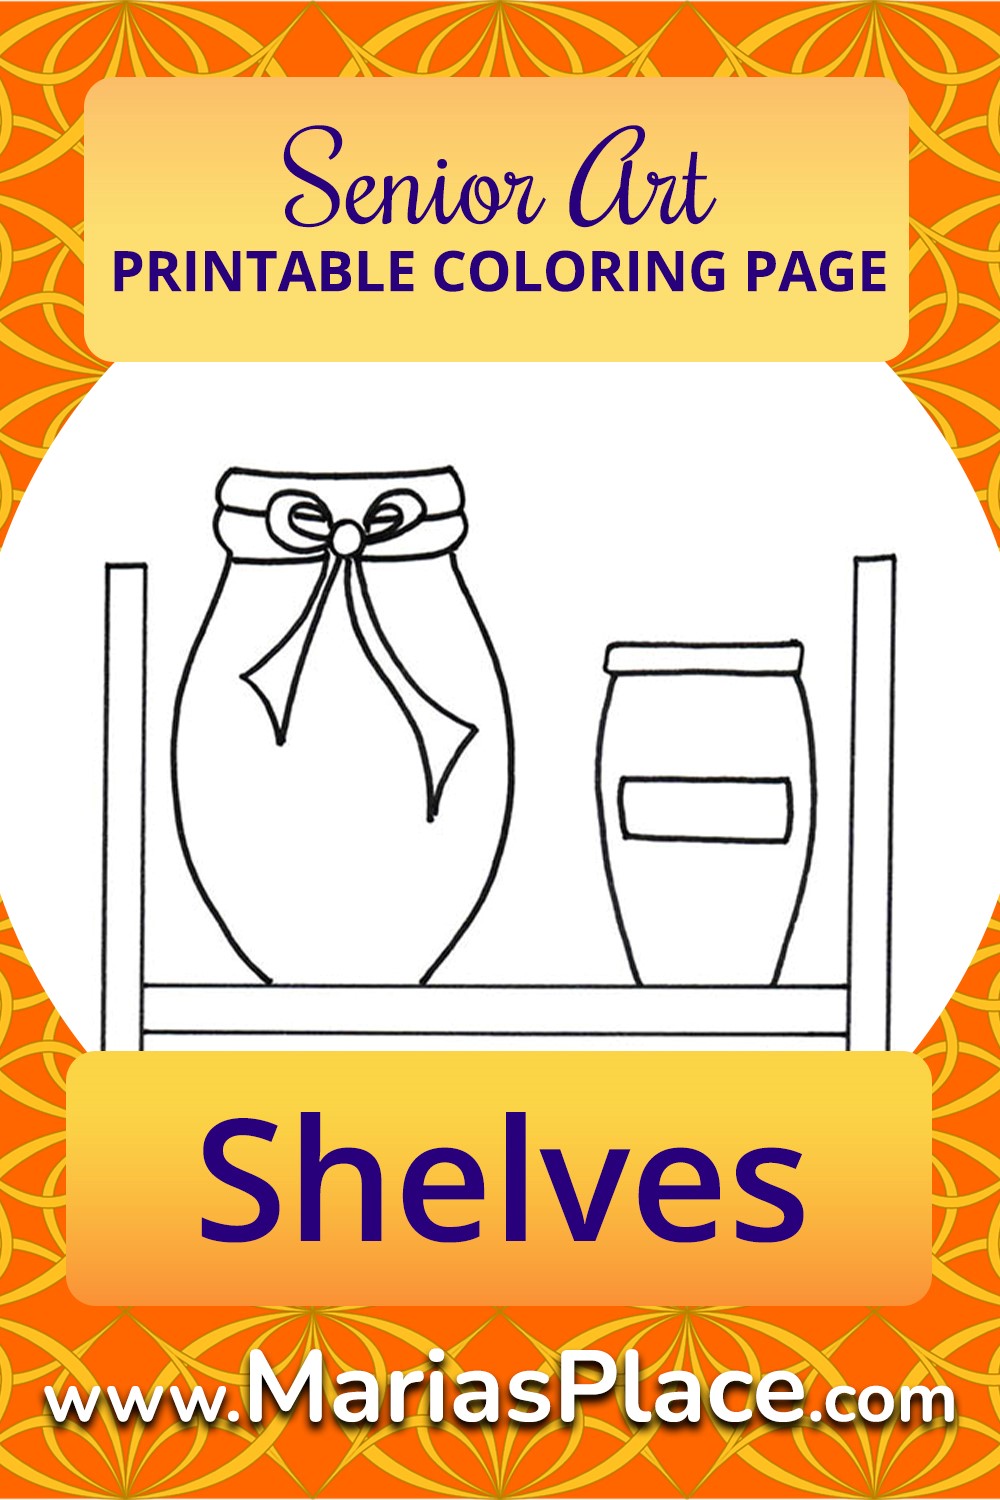 Coloring – Shelves